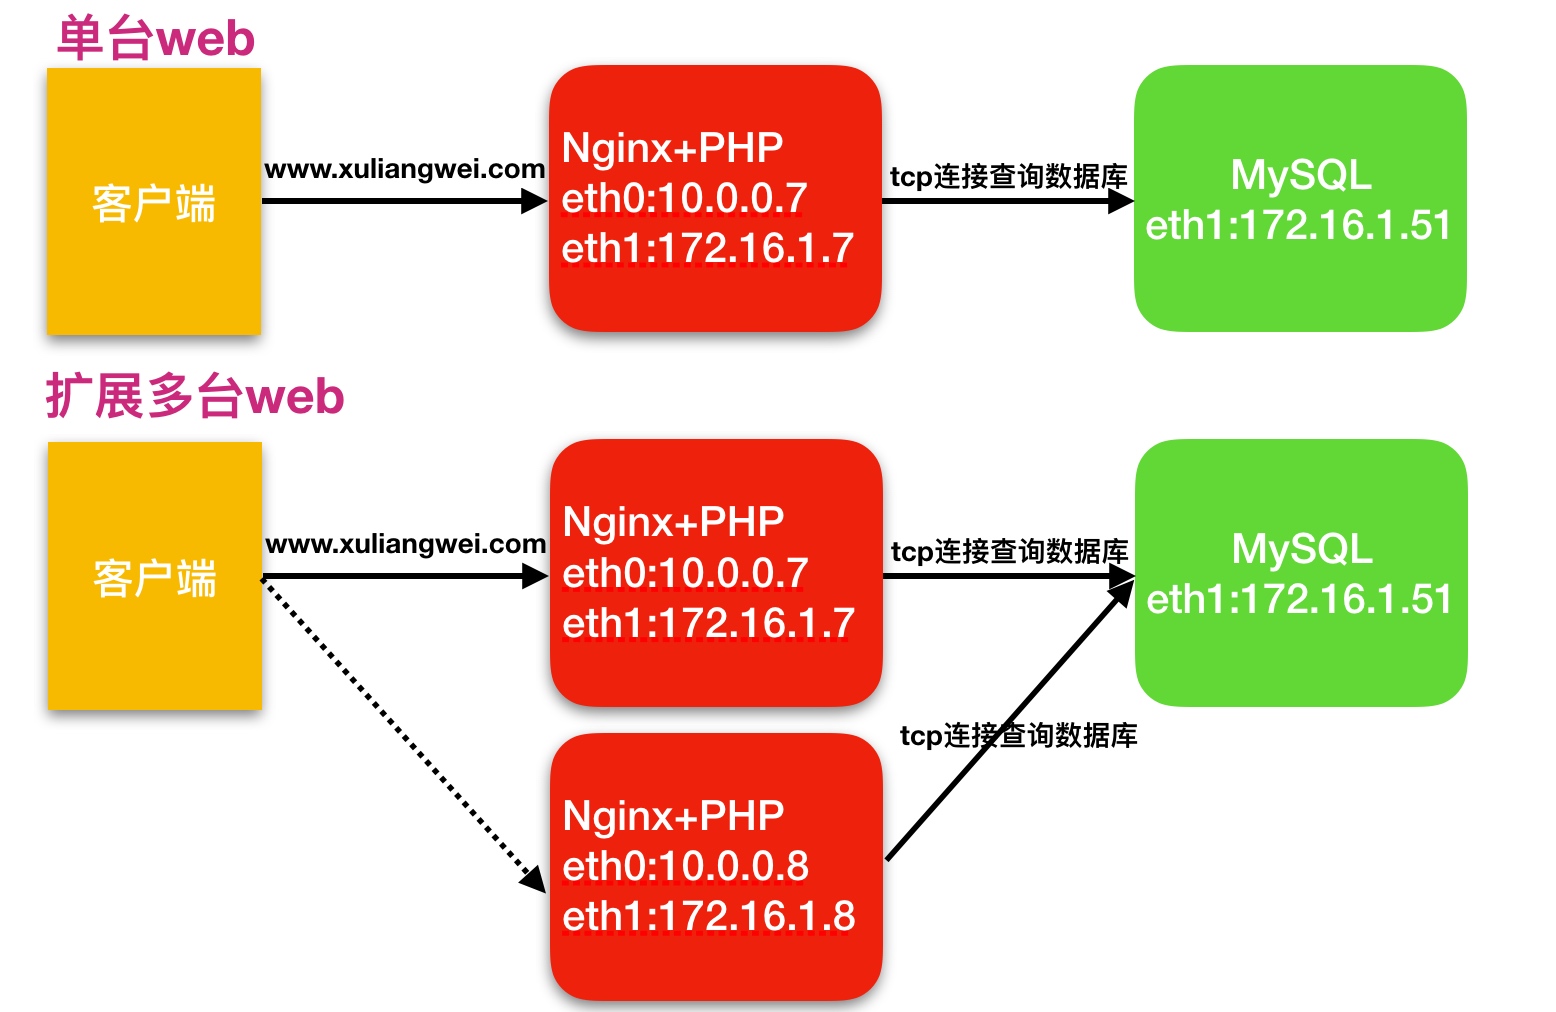 04.Nginx搭建流行架构 - 图19